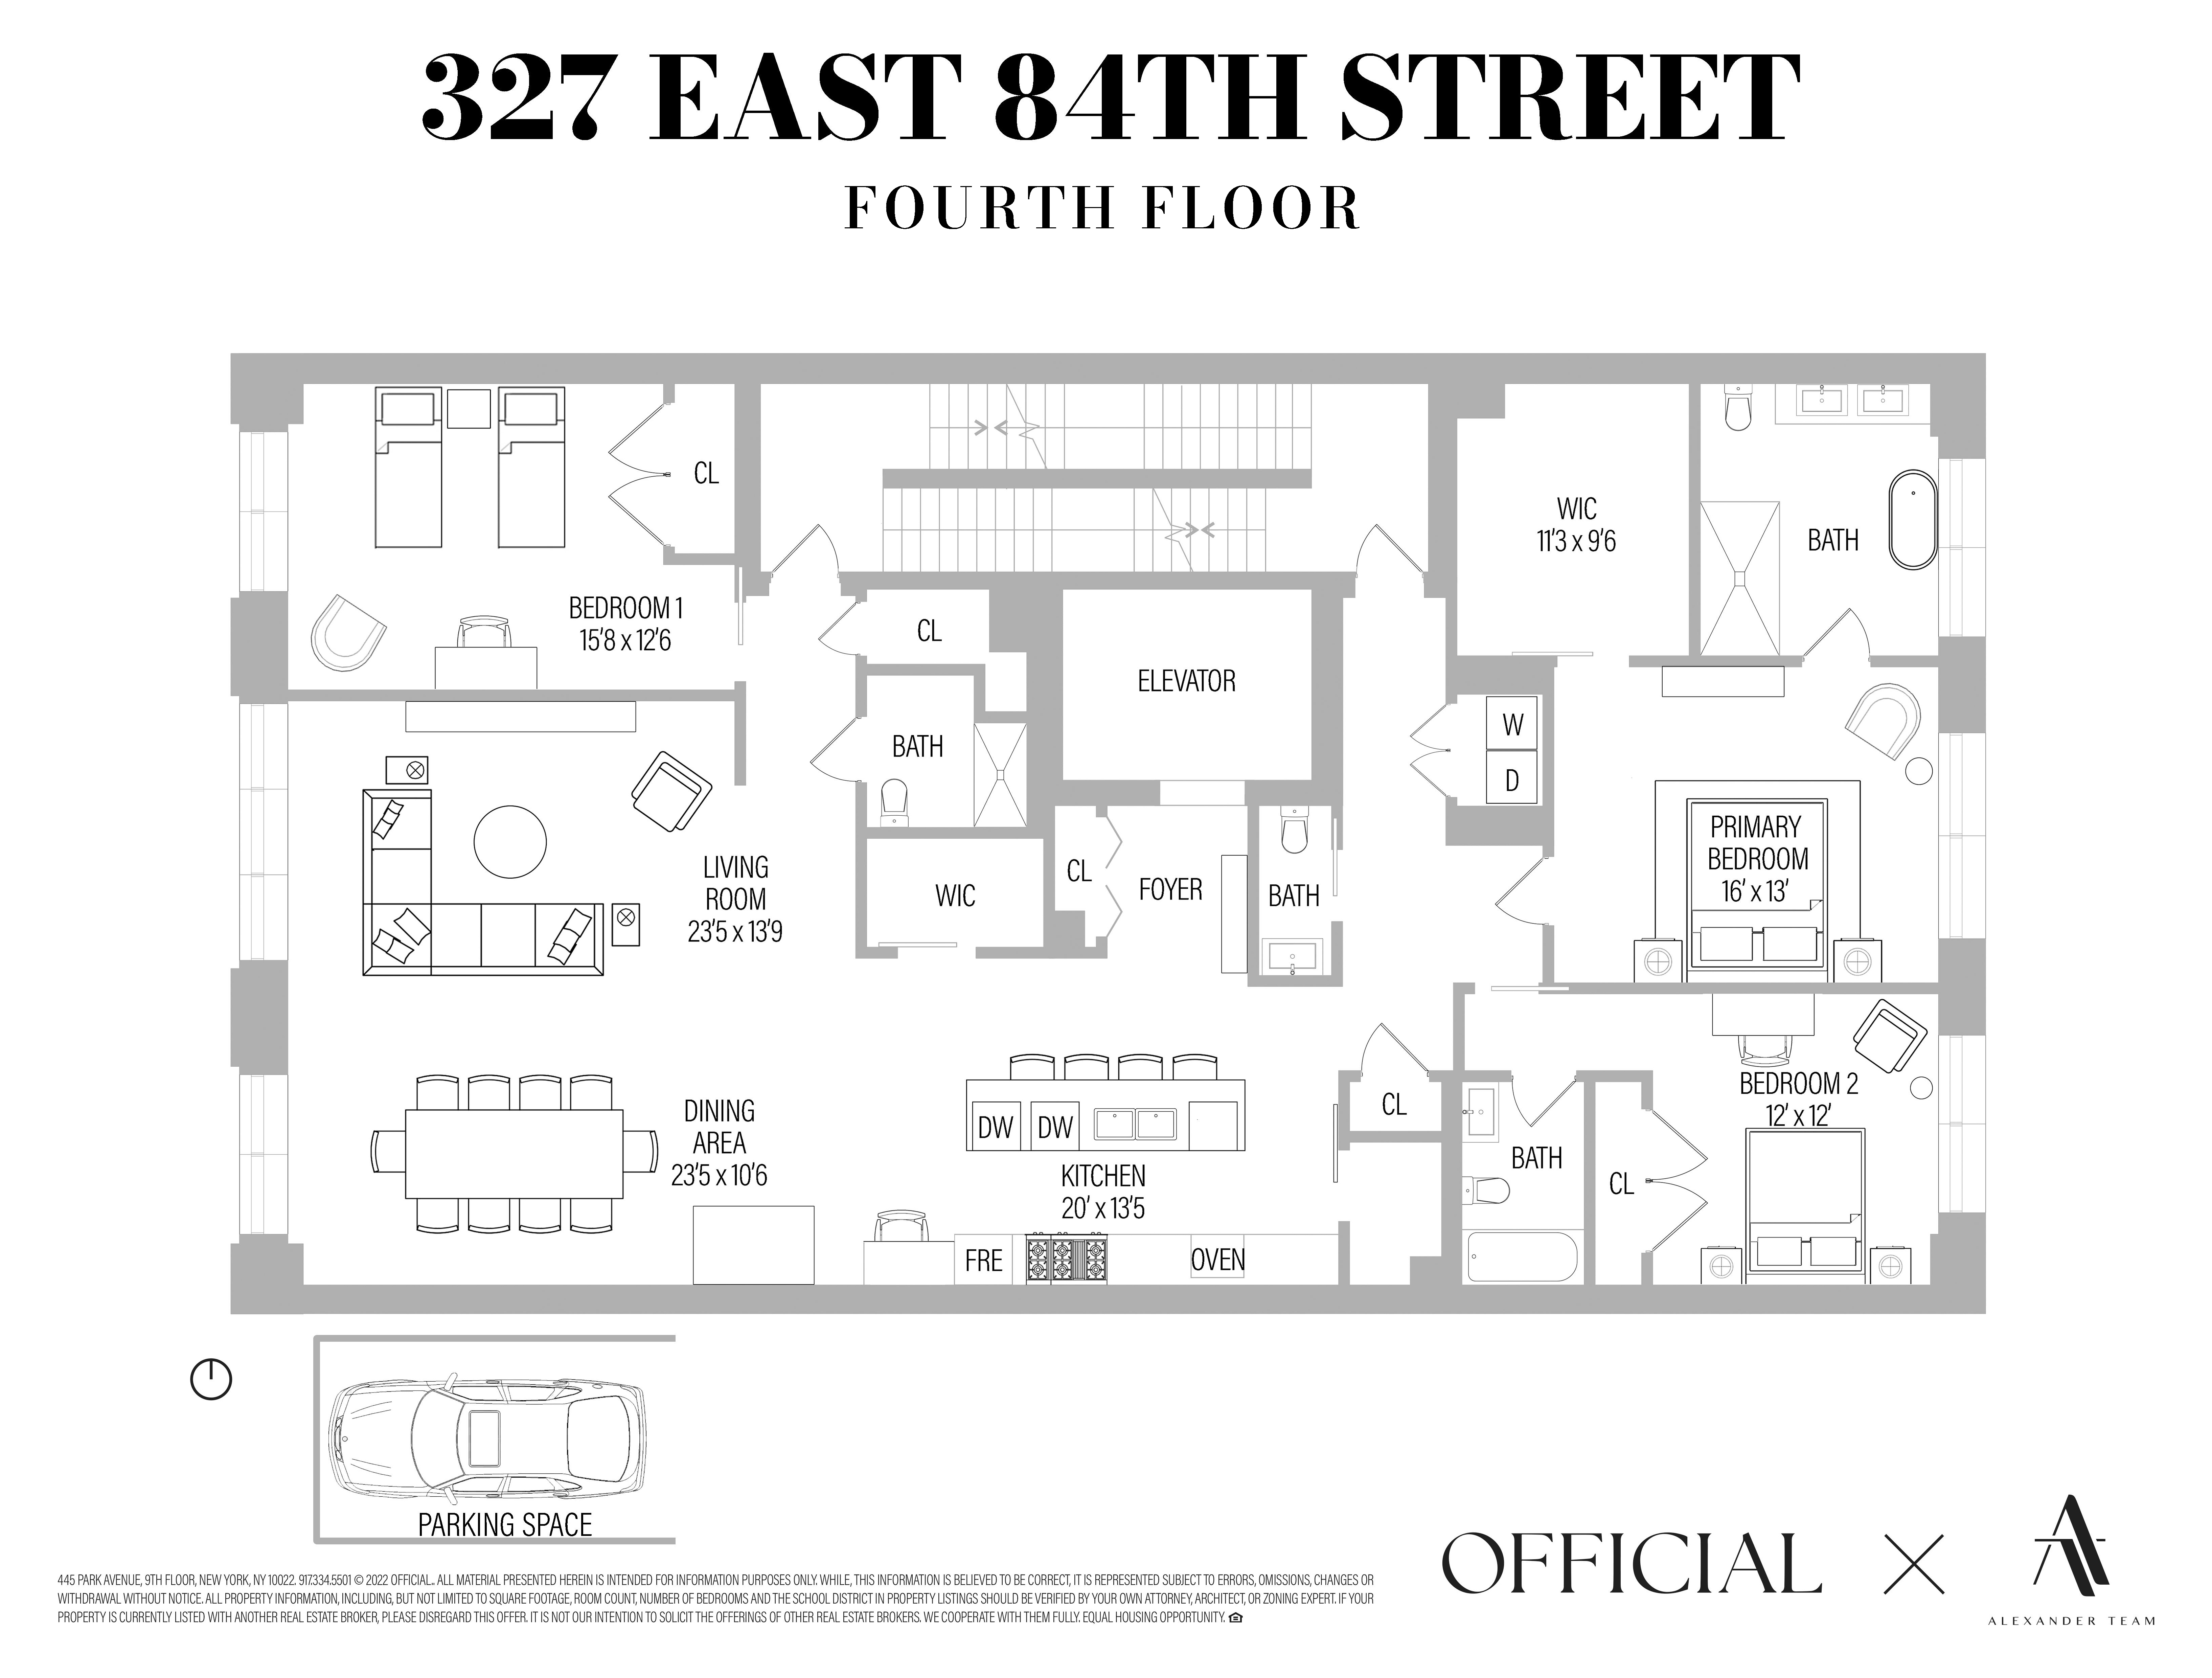 Floorplan for 327 East 84th Street, 4